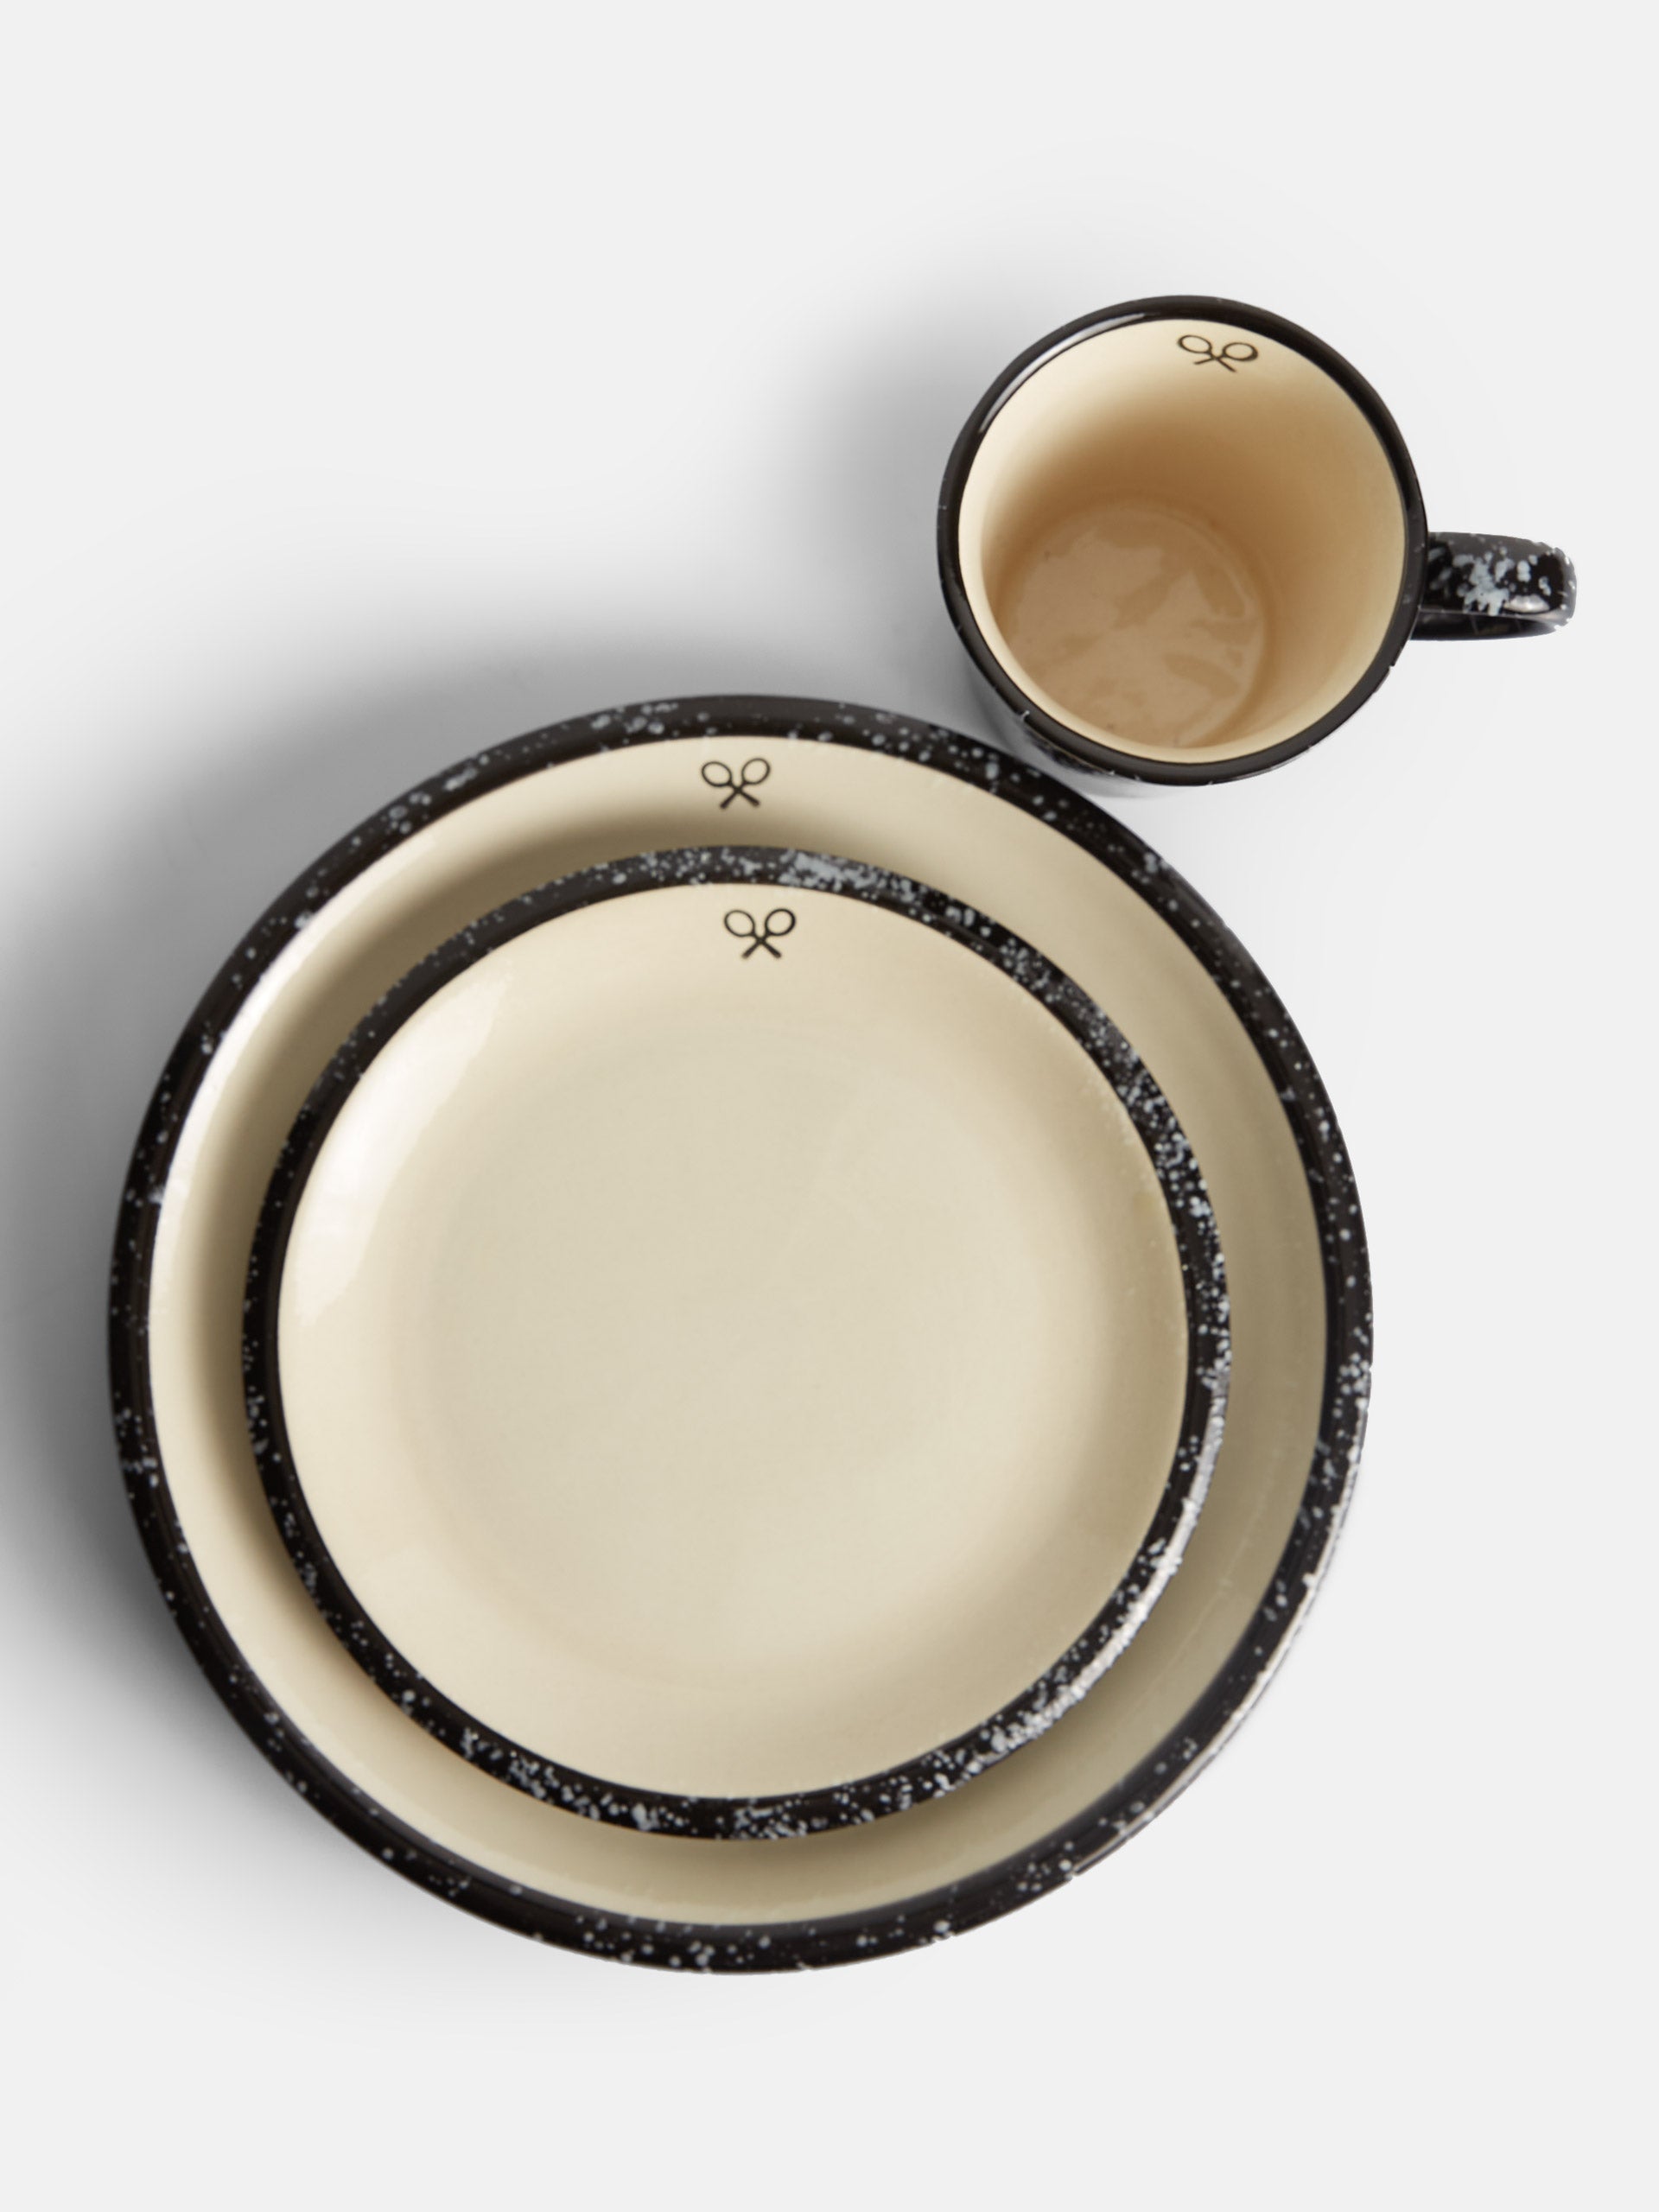 Two-tone enamel ceramic flat plate